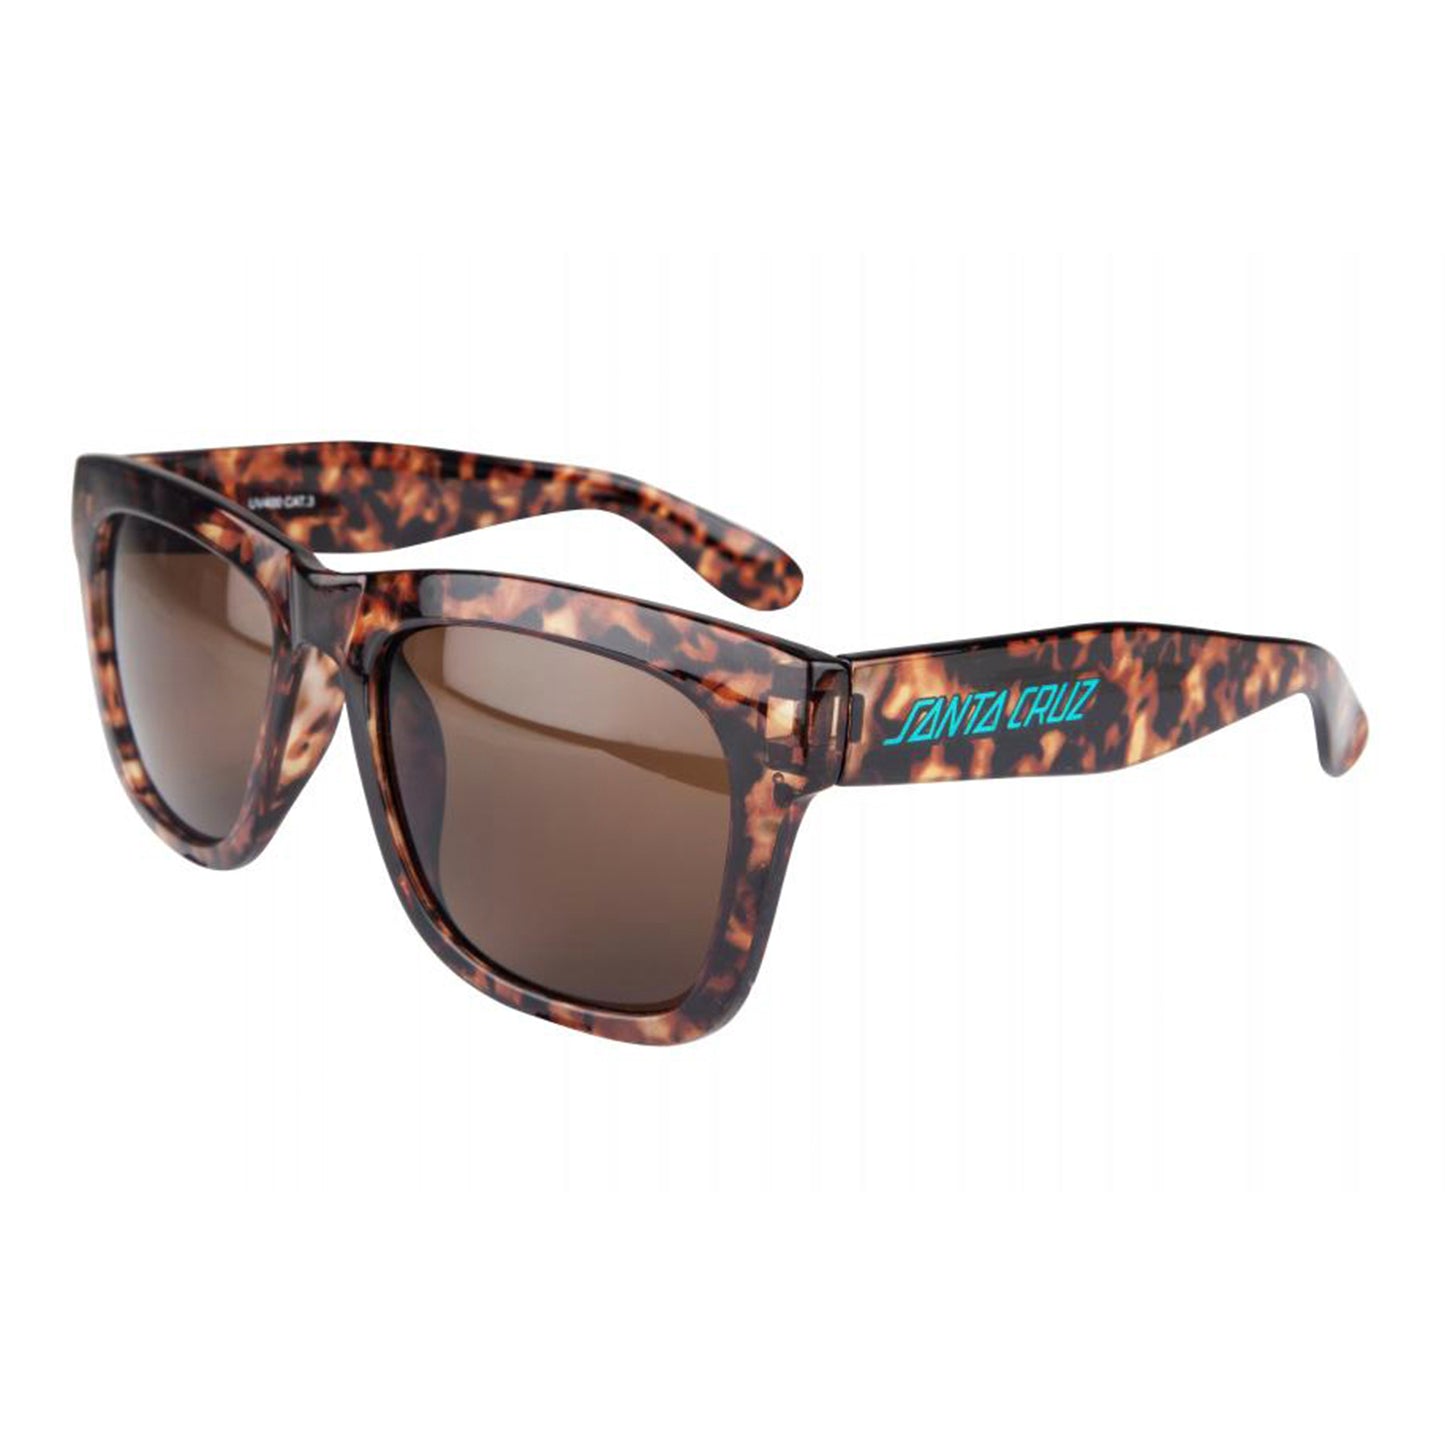 Santa Cruz Strip II Womens Sunglasses - Brown Tortoiseshell - Prime Delux Store